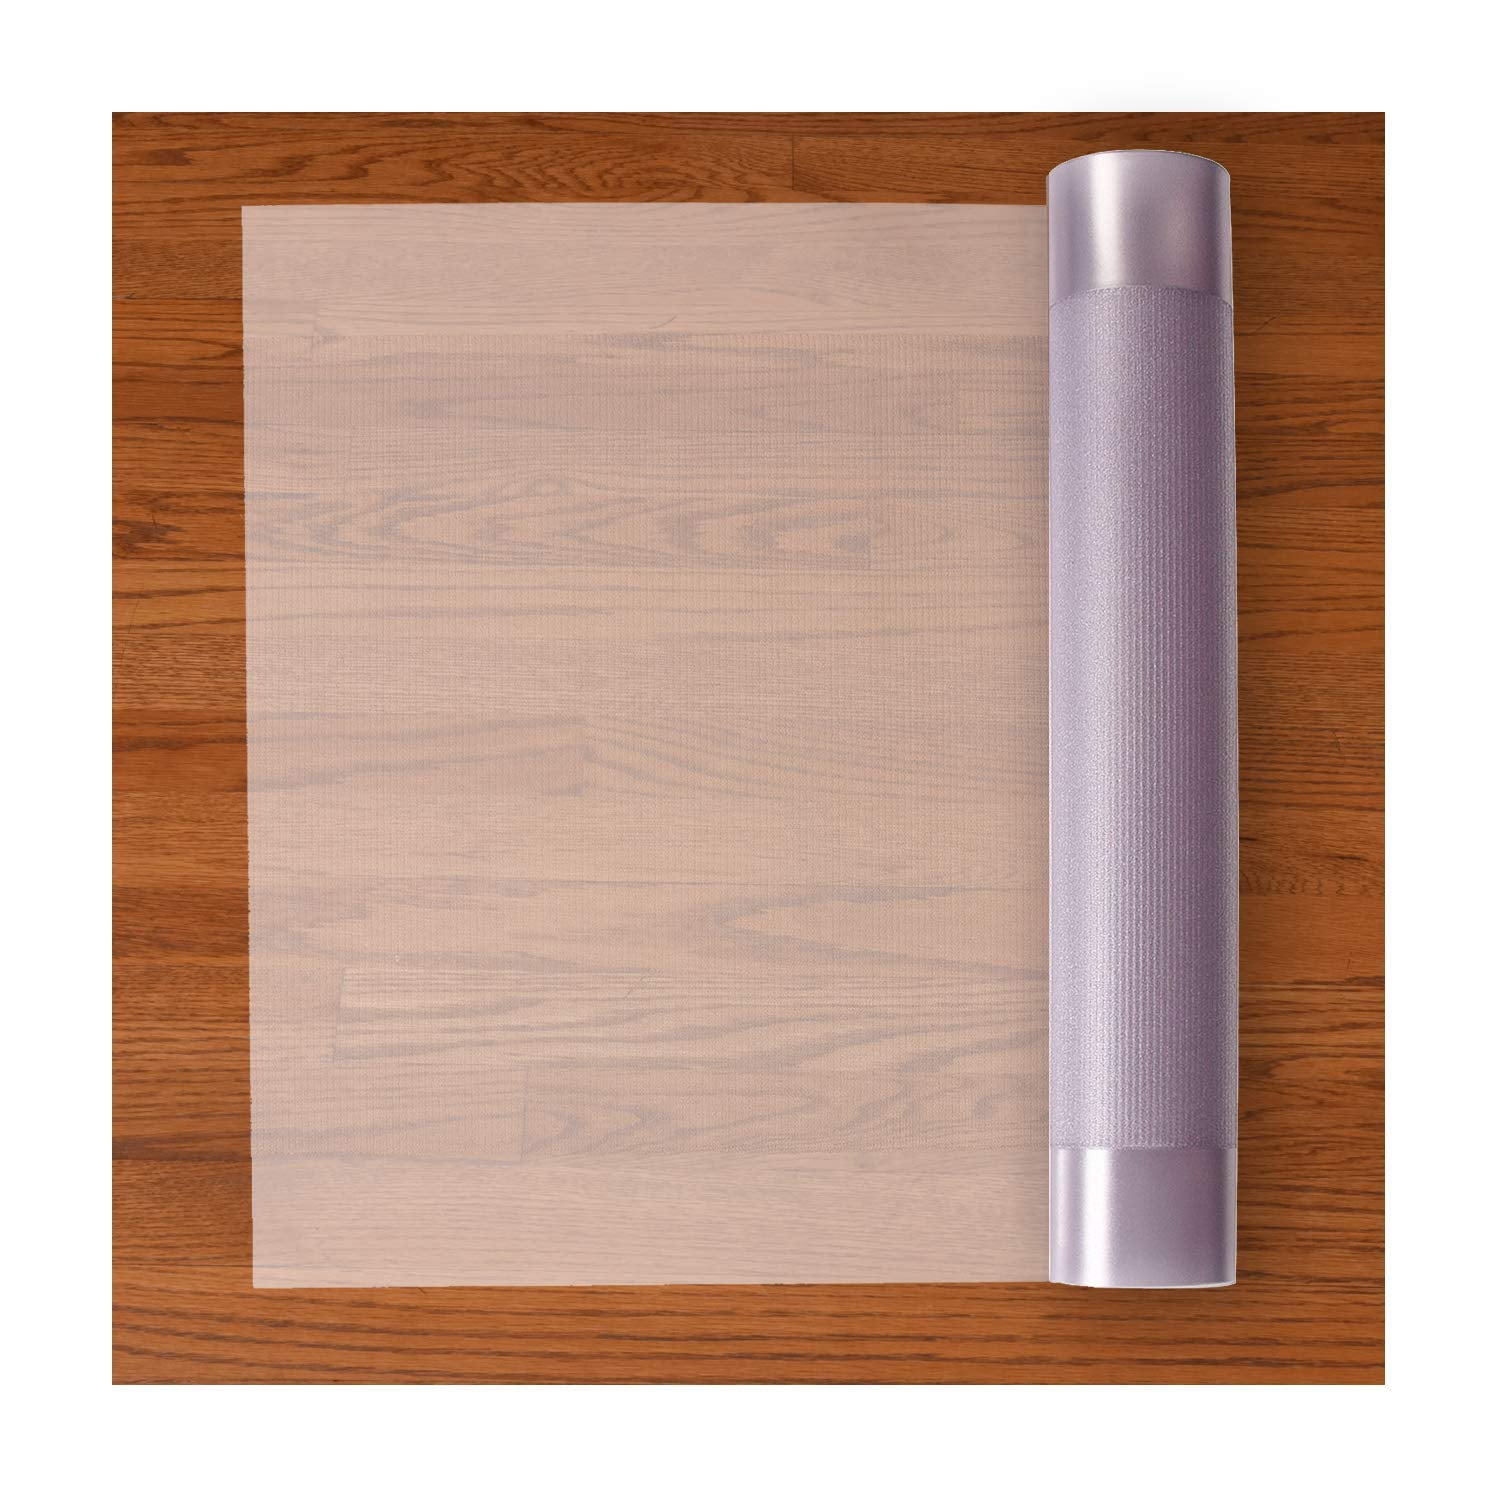 8ft Hallway Carpet Protector Runner Vinyl Plastic Mat Guard Home Office 27" Wide 